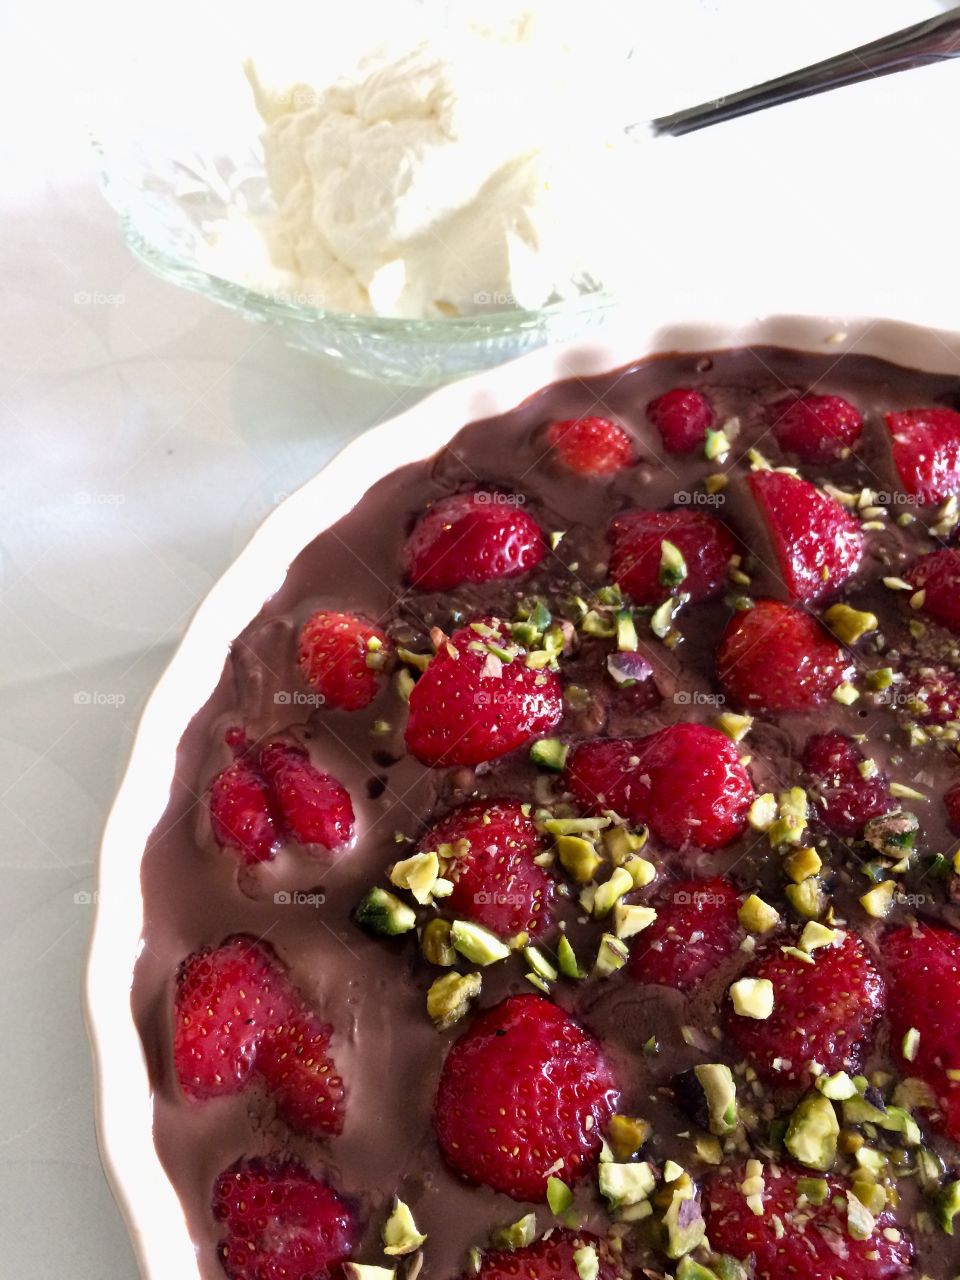 Best strawberry/chocolate tart I’ve ever had!